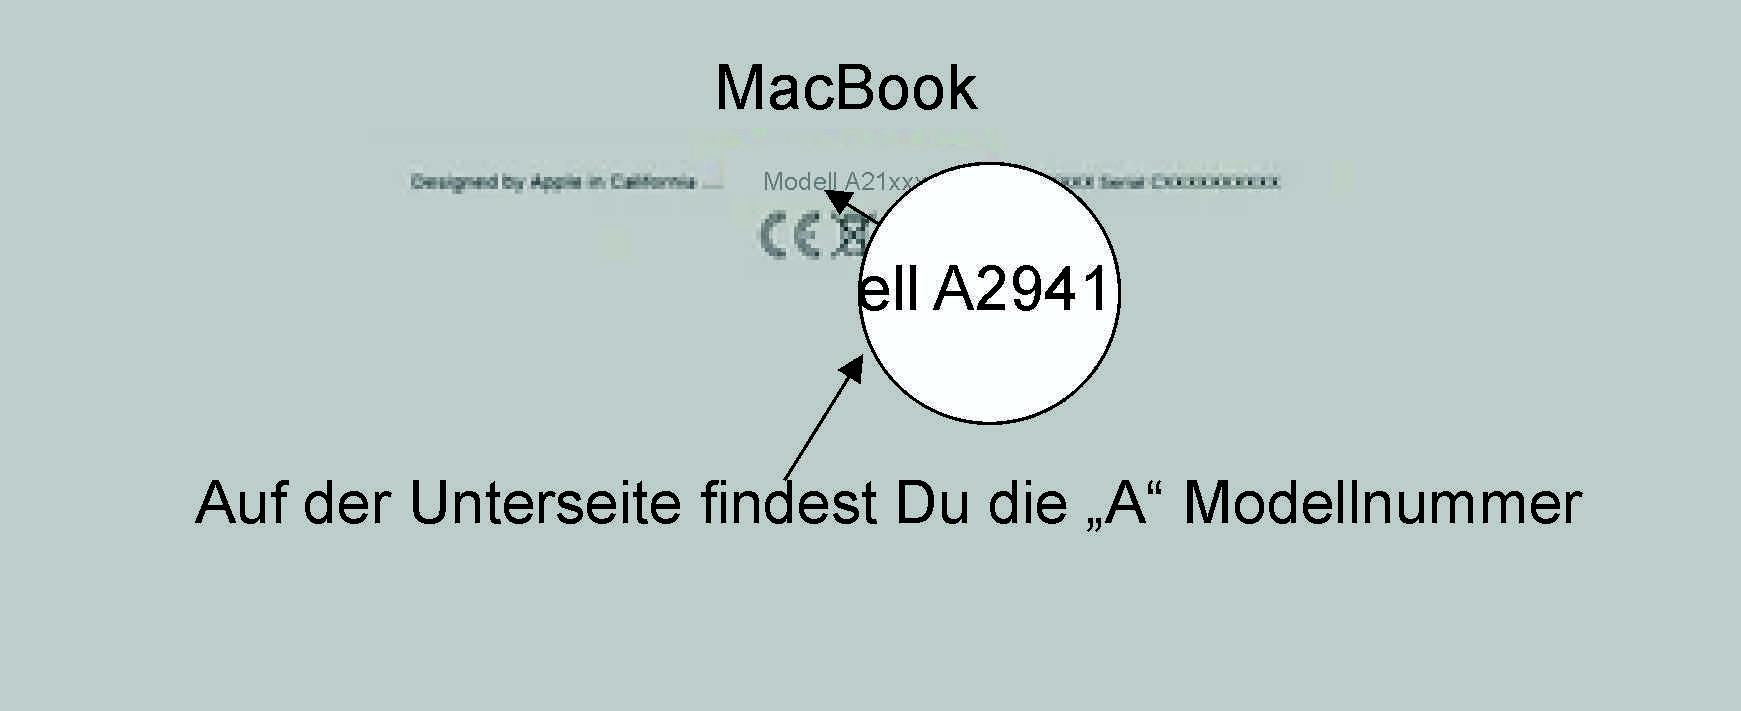 MacBook Air Skin Cover Kratzer Schutzfolie Aufkleber Skull Lady Elektronik-Sticker & -Aufkleber skins4u   